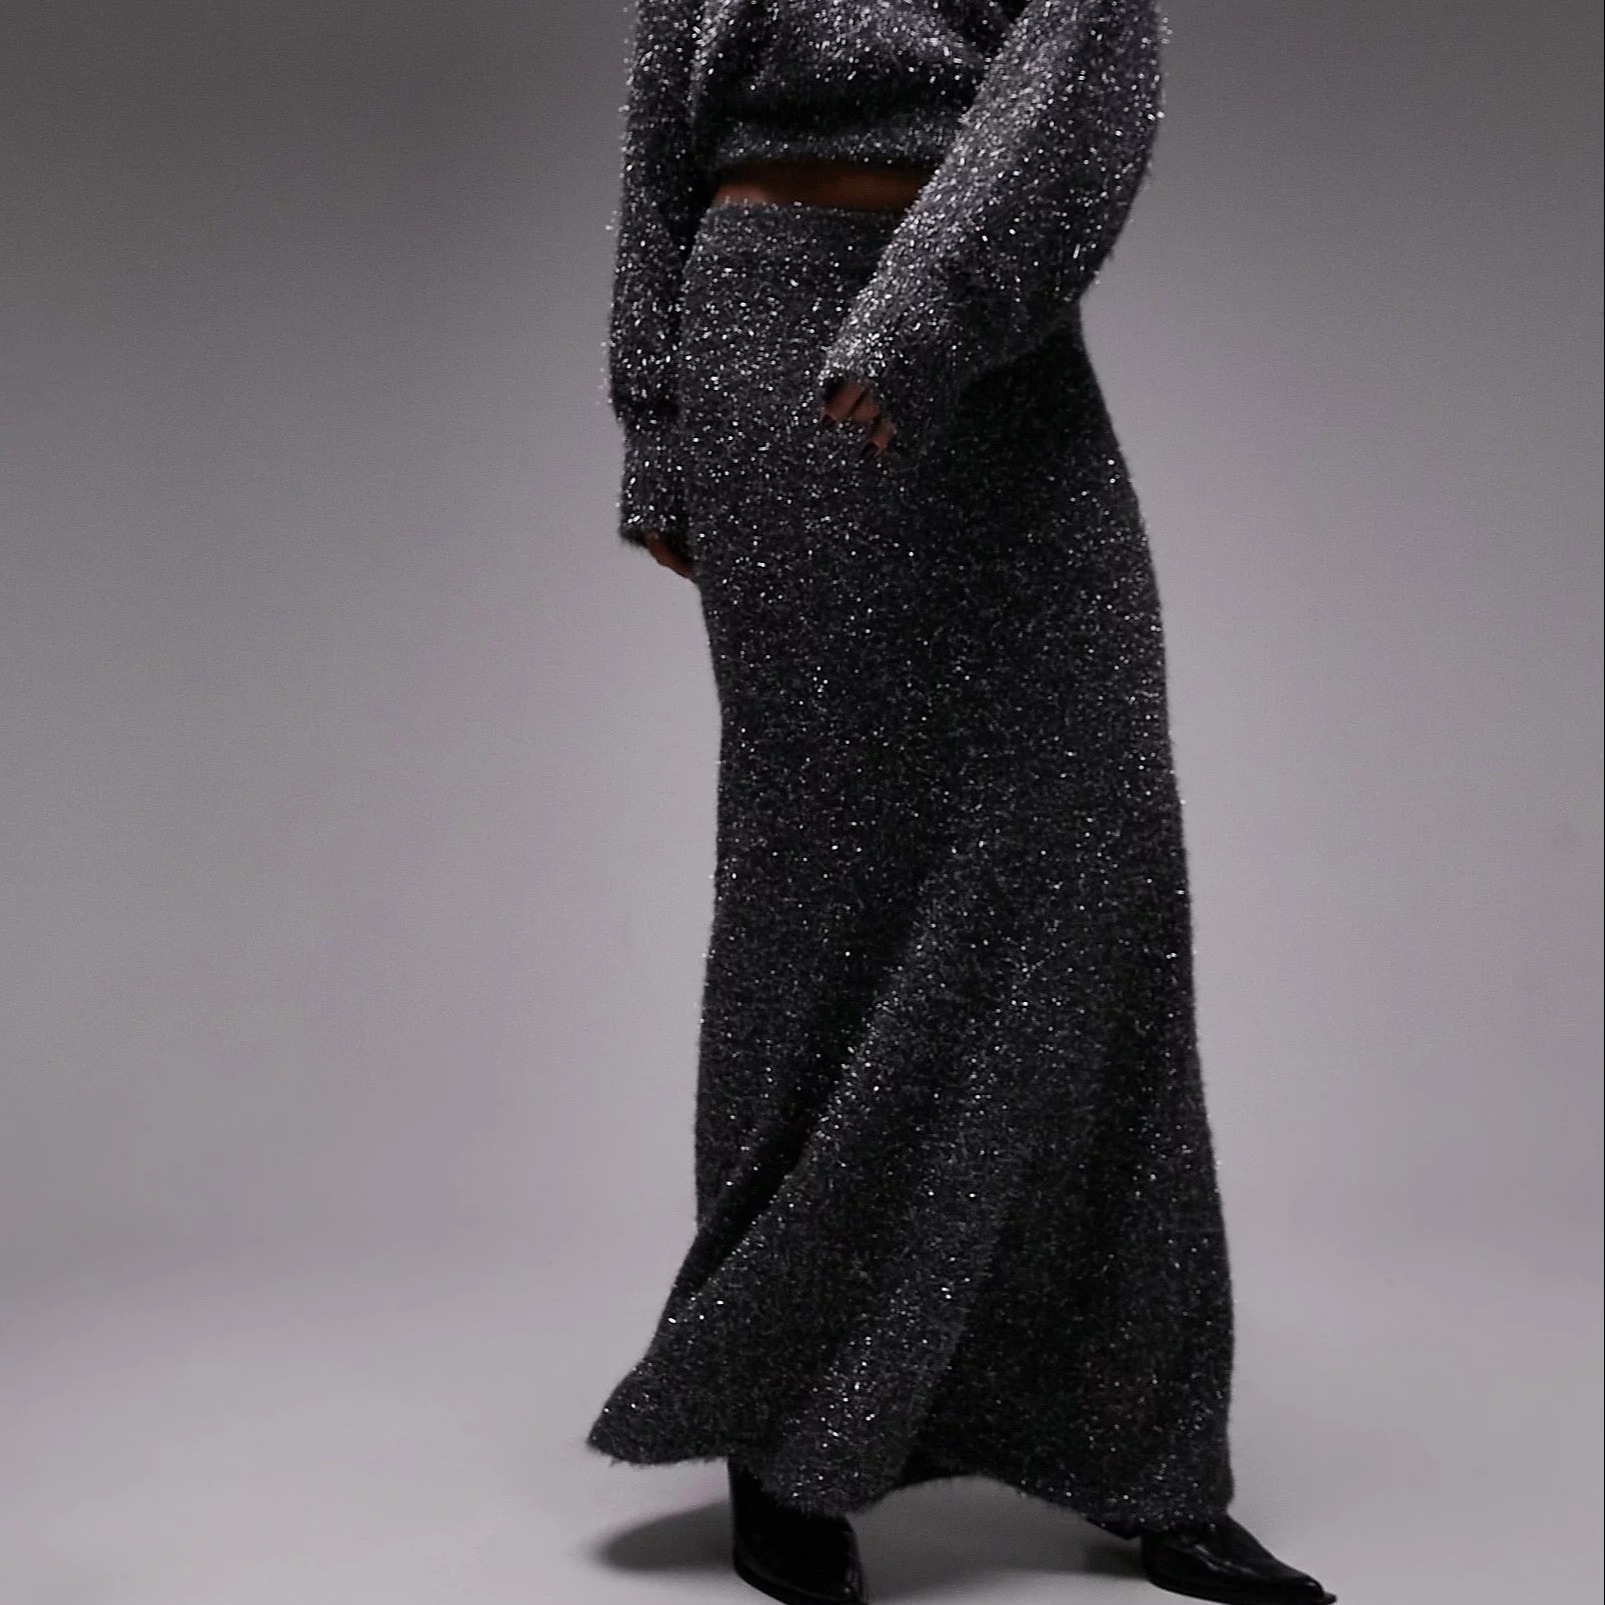 Юбка Topshop Knitted Tinsel, темно-серый юбка макси на декоративном поясе резинке